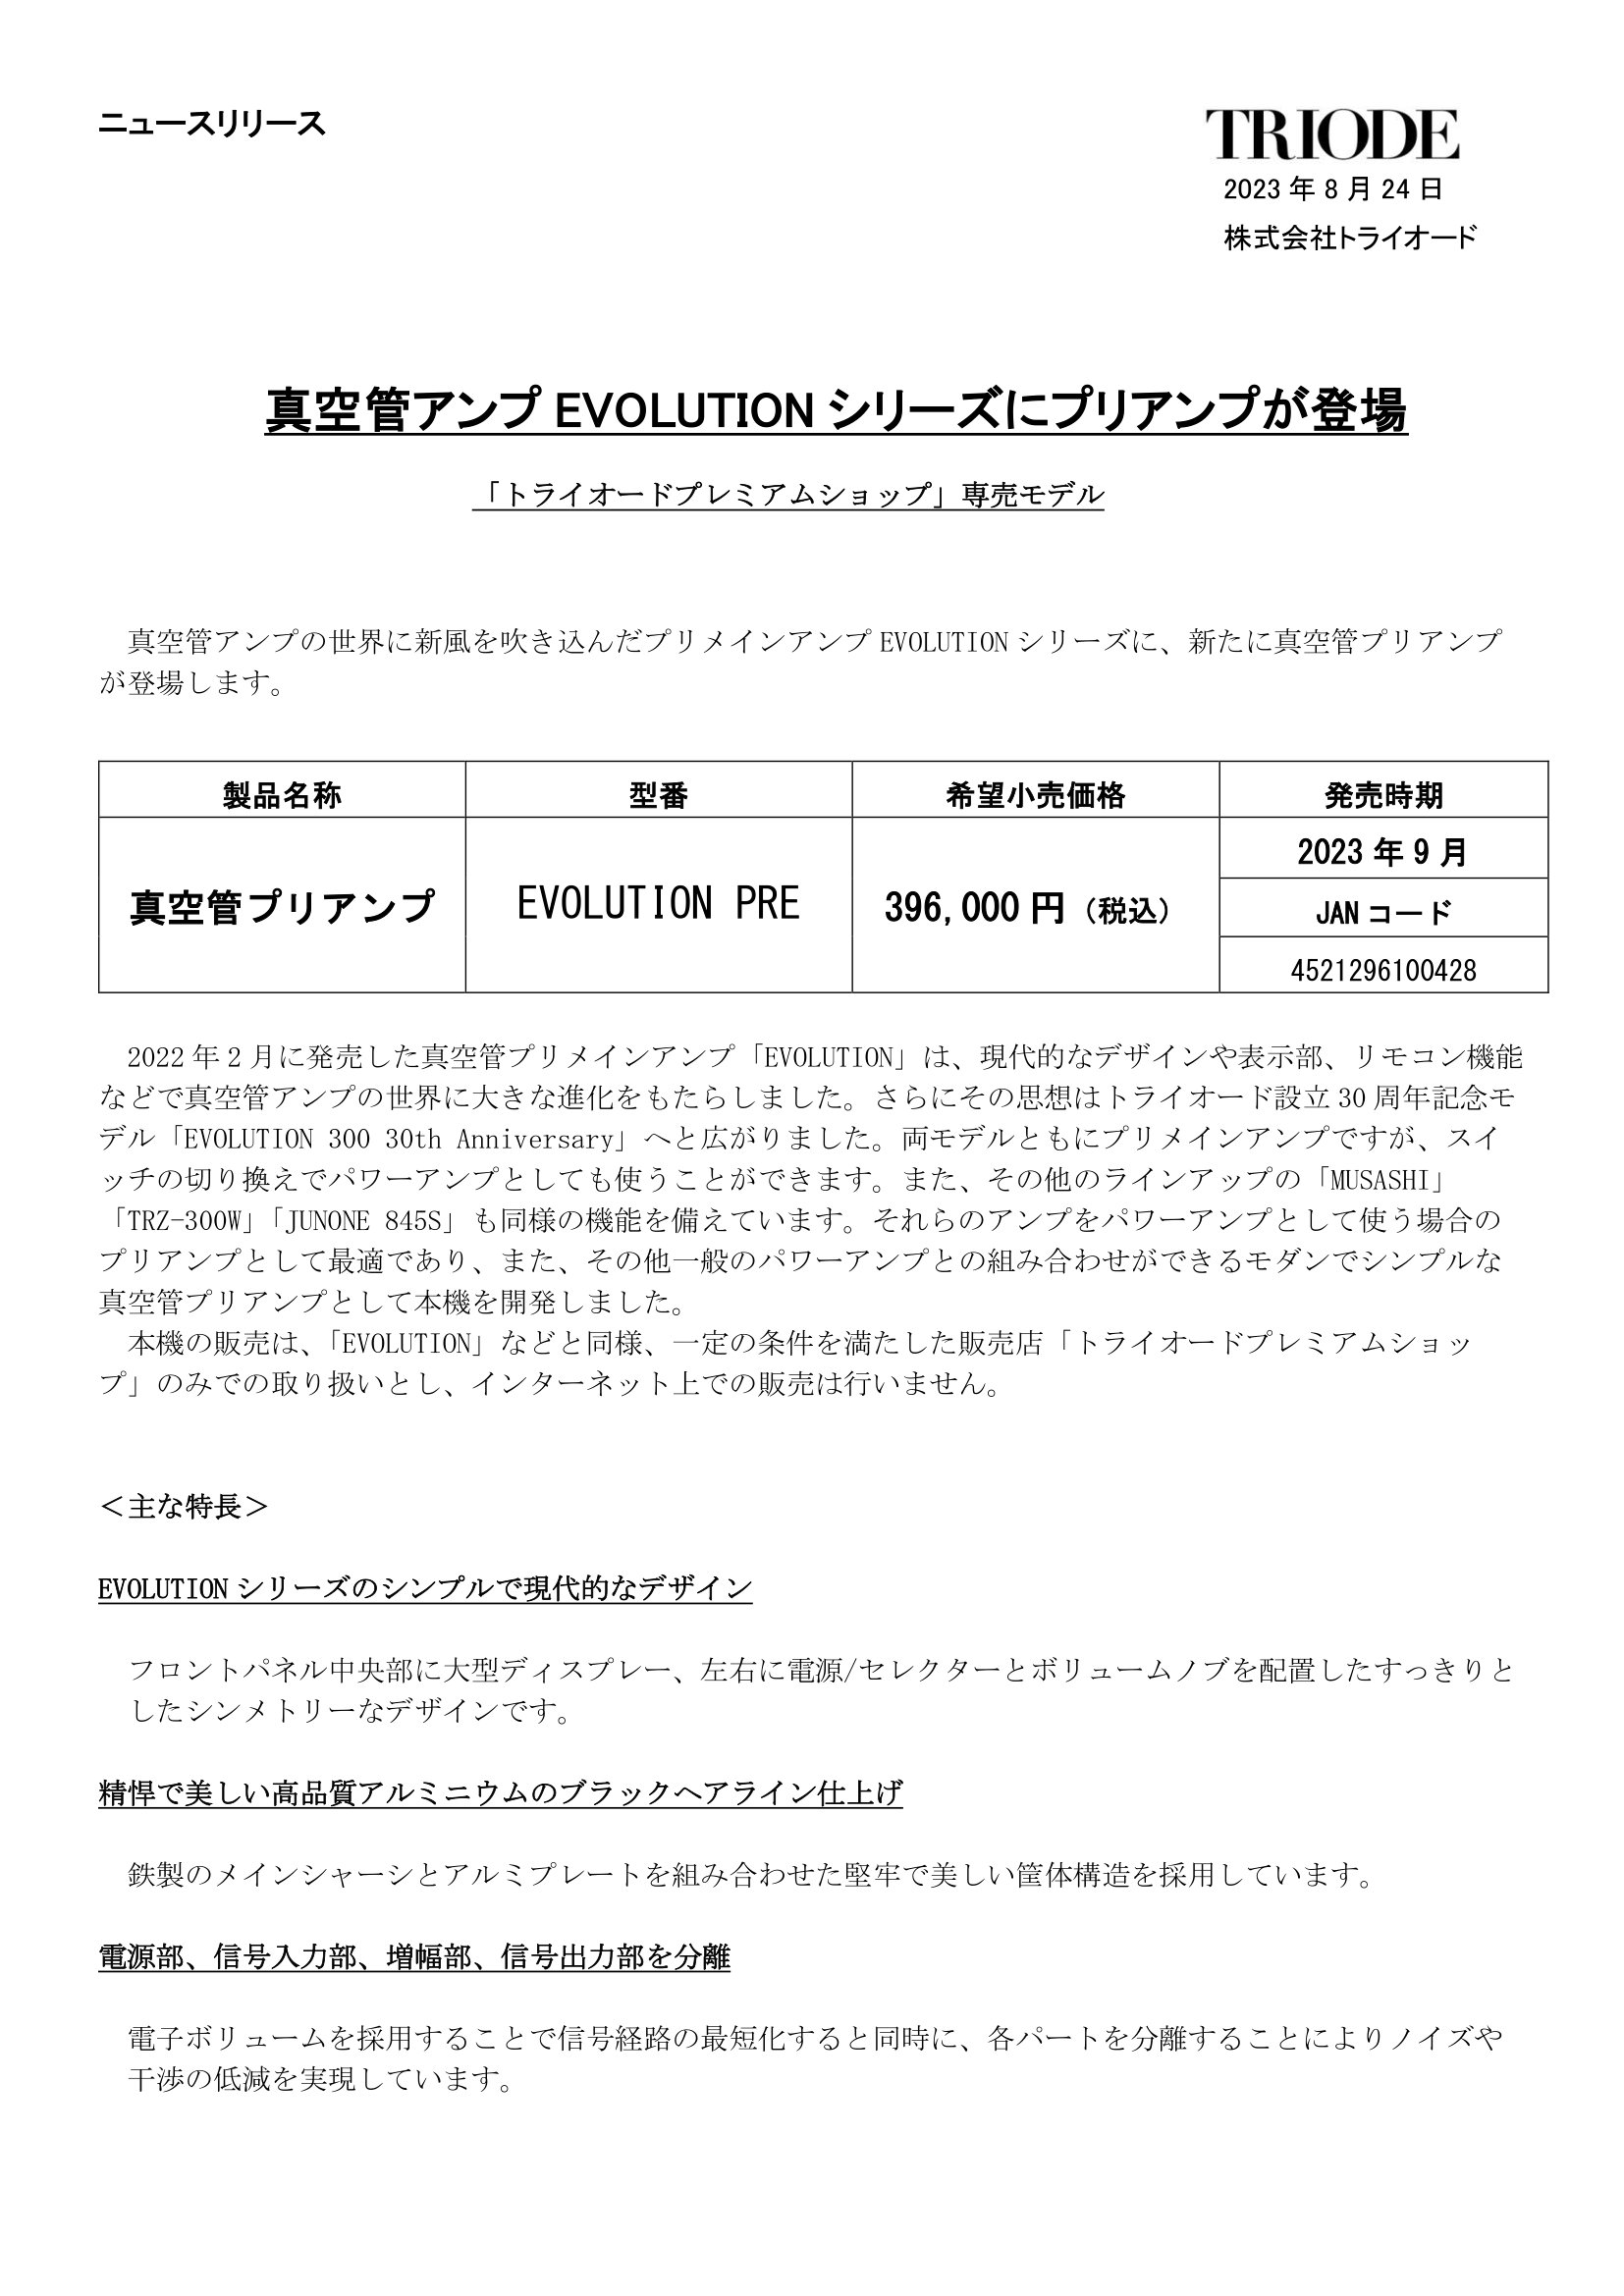 EVOLUTION PRE ニュースリリース　230824-1